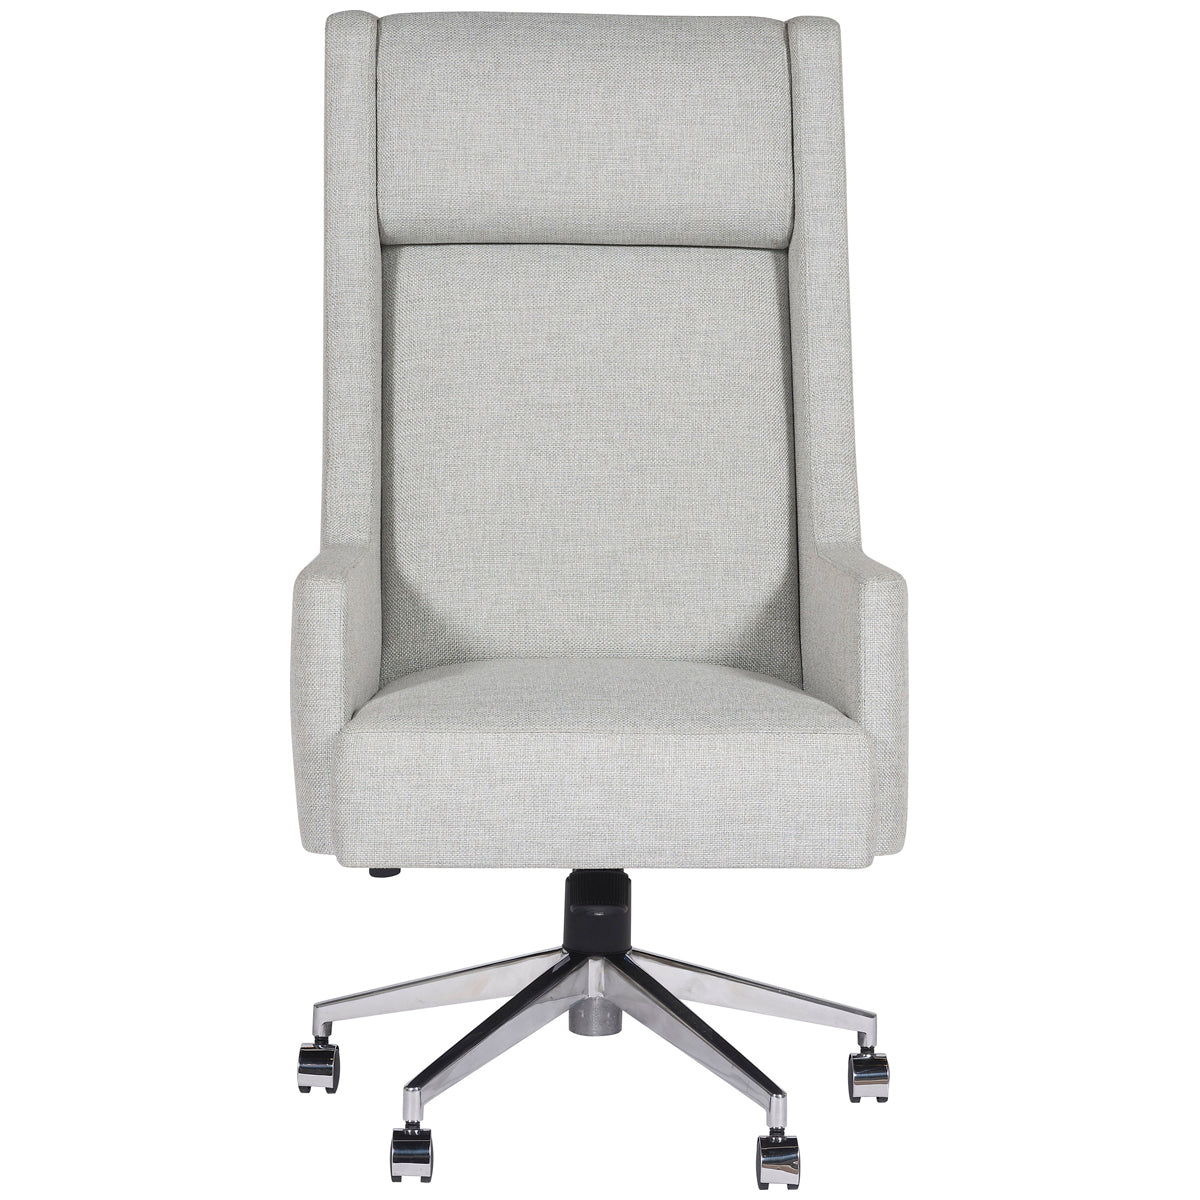 Vanguard Furniture Hartley Desk Chair